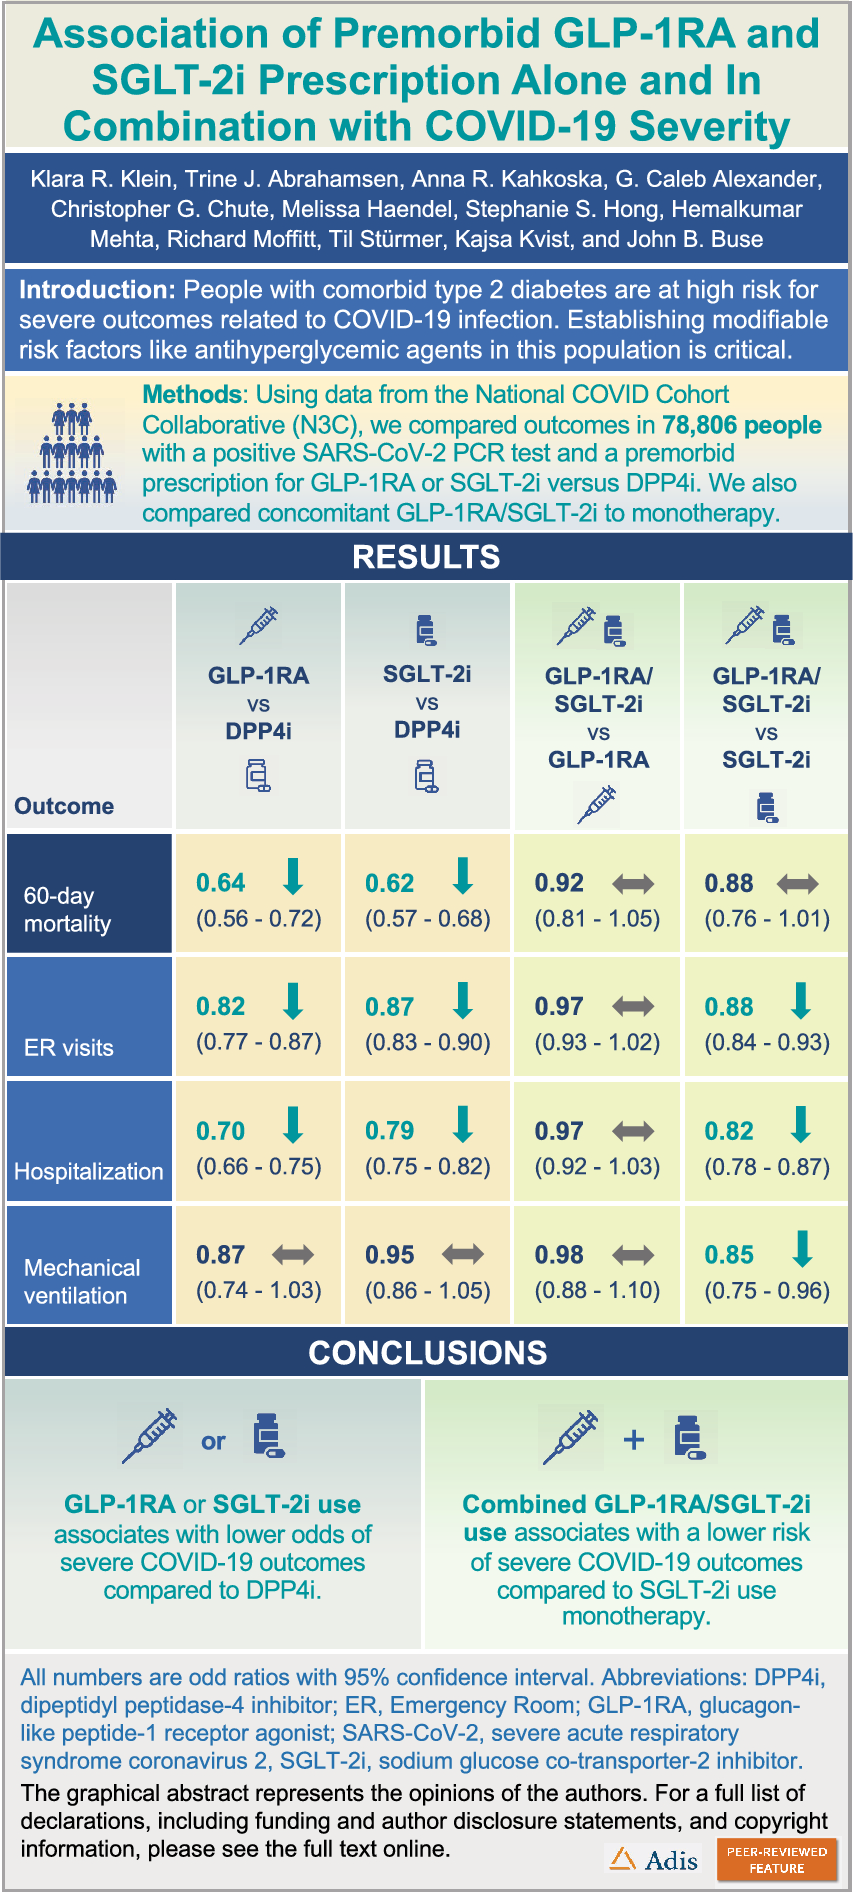 Association of Premorbid GLP-1RA and SGLT-2i Prescription Alone and in Combination with COVID-19 Severity